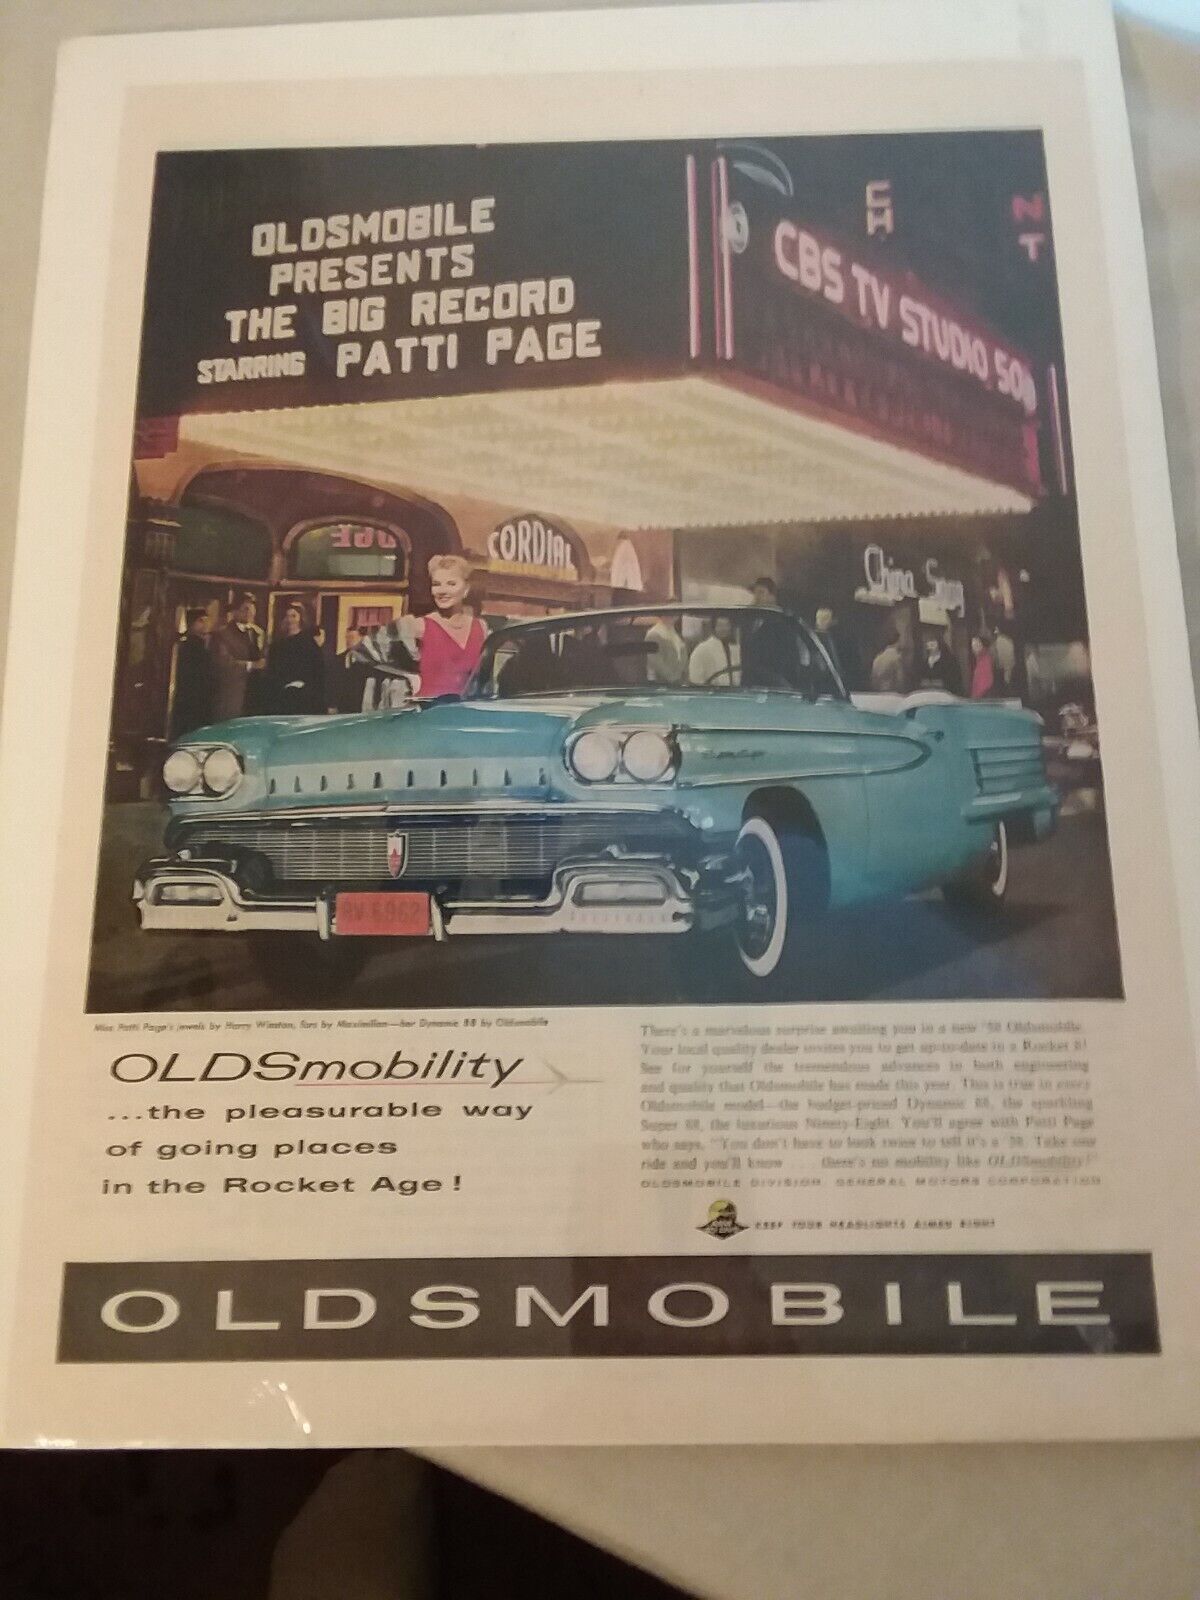 Oldsmobile Presidents The Big Record Starting Patti Page. CBS TV studio 50